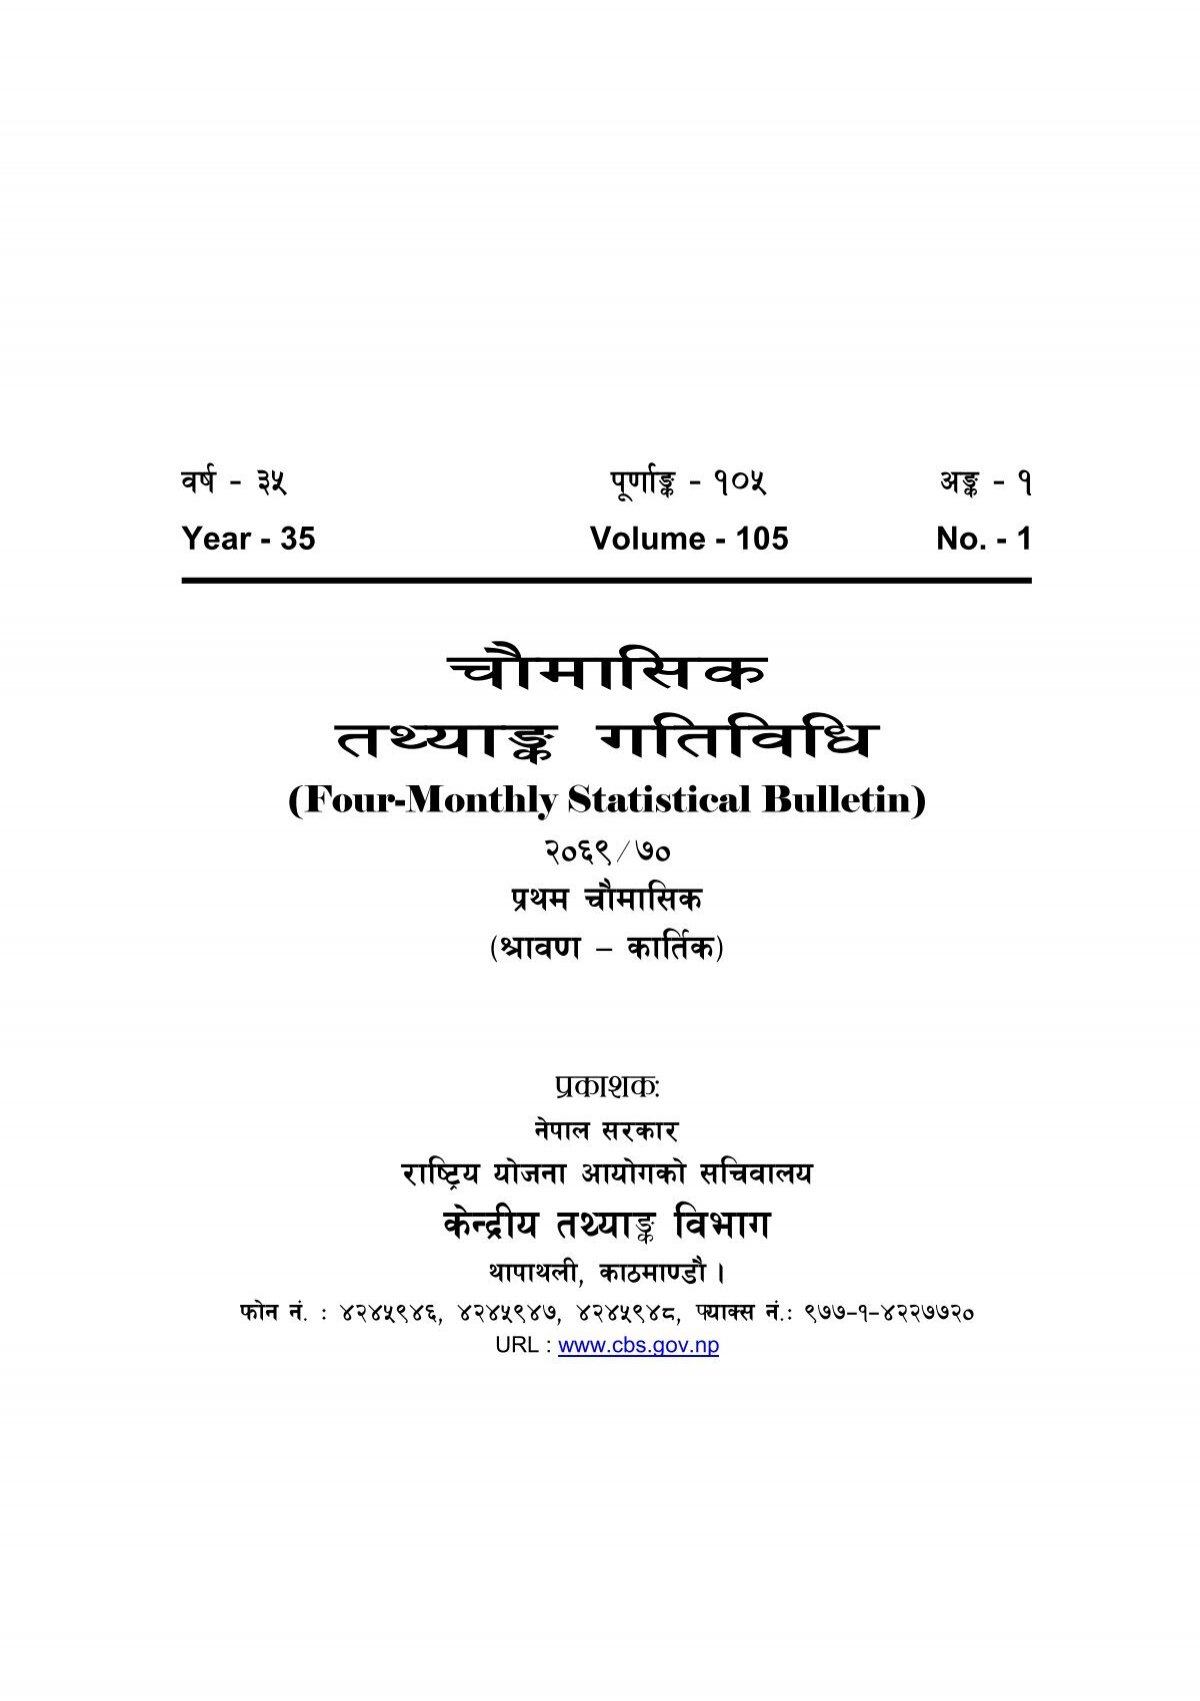 Statistical Bulletin VOL 105.pdf - Central Bureau of Statistics